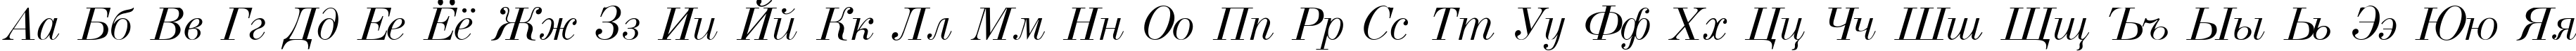 Пример написания русского алфавита шрифтом Usual New Italic